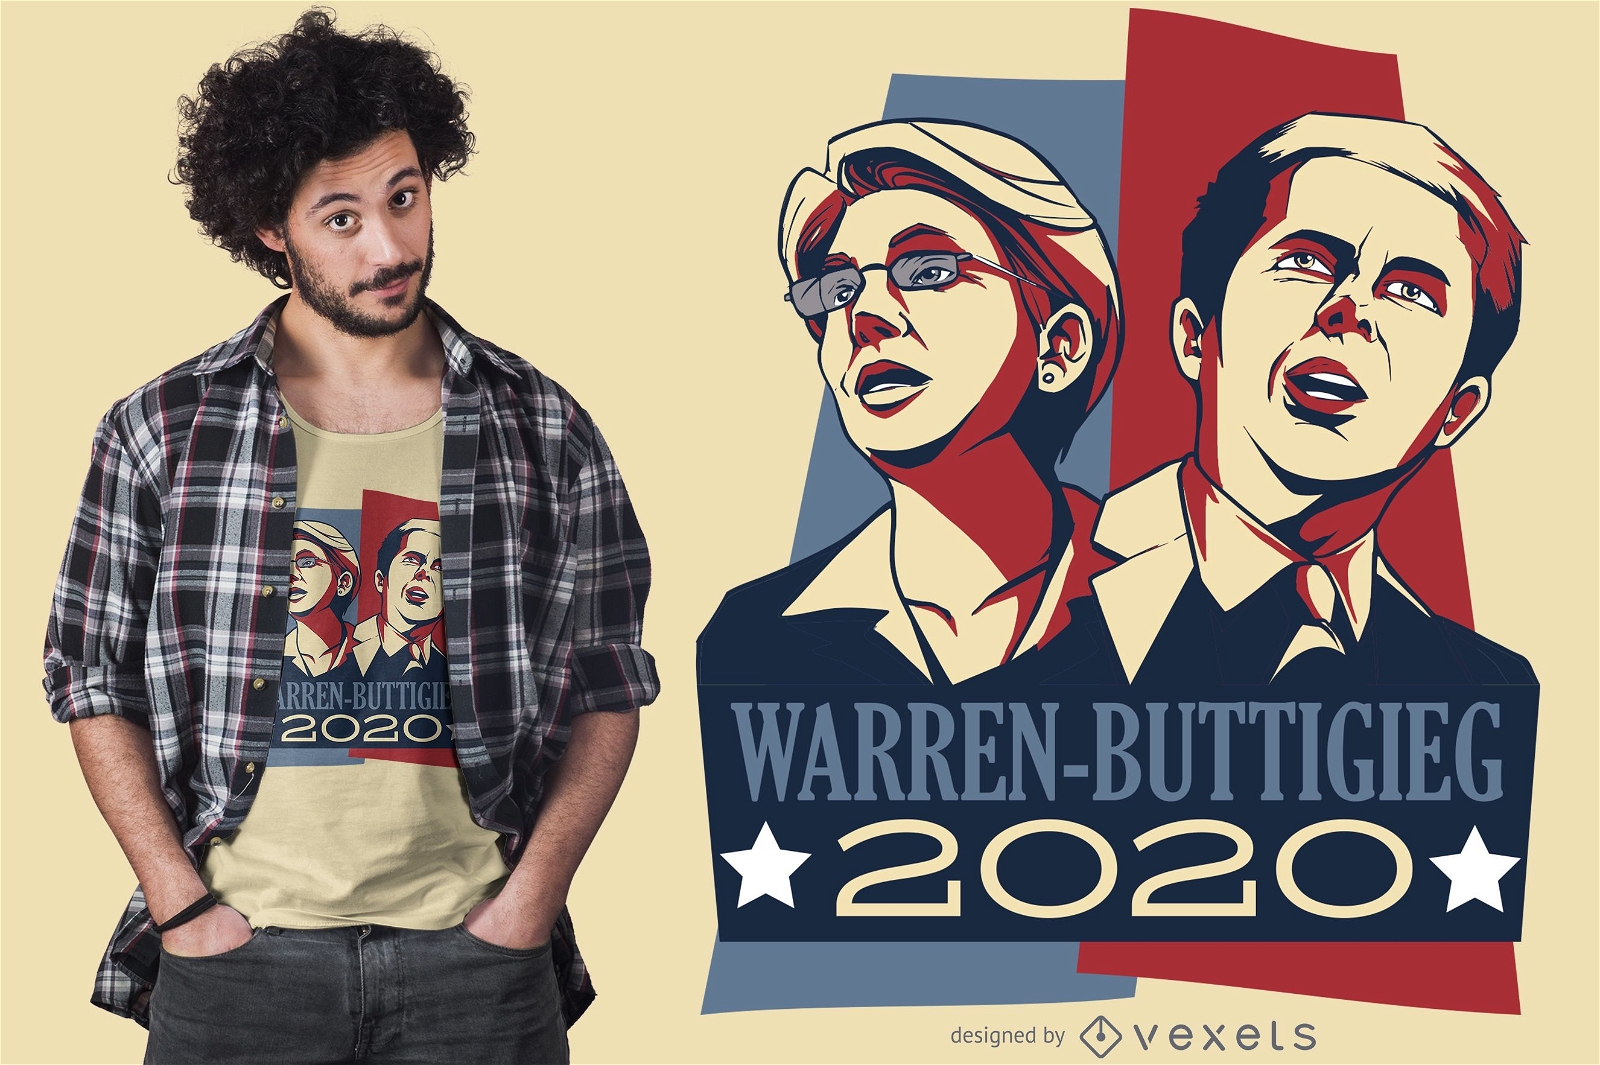 Warren Buttigieg Debate 2020 T-shirt Design